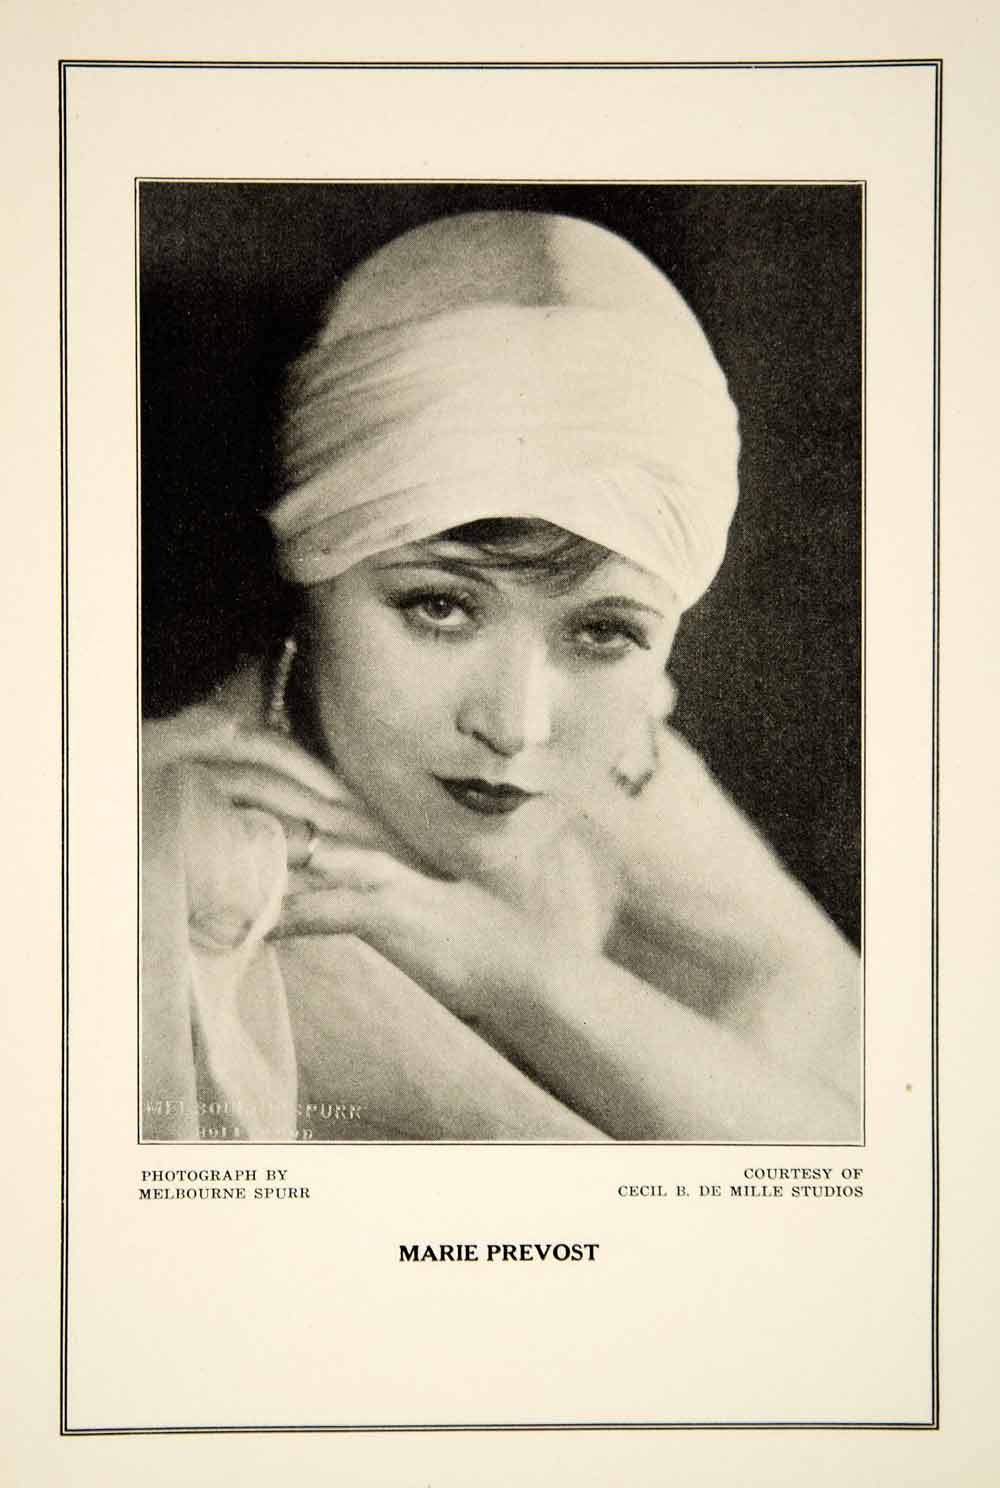 1927 Print Marie Prevost Actress Silent Film Movie Star Portrait Melbourne Spurr